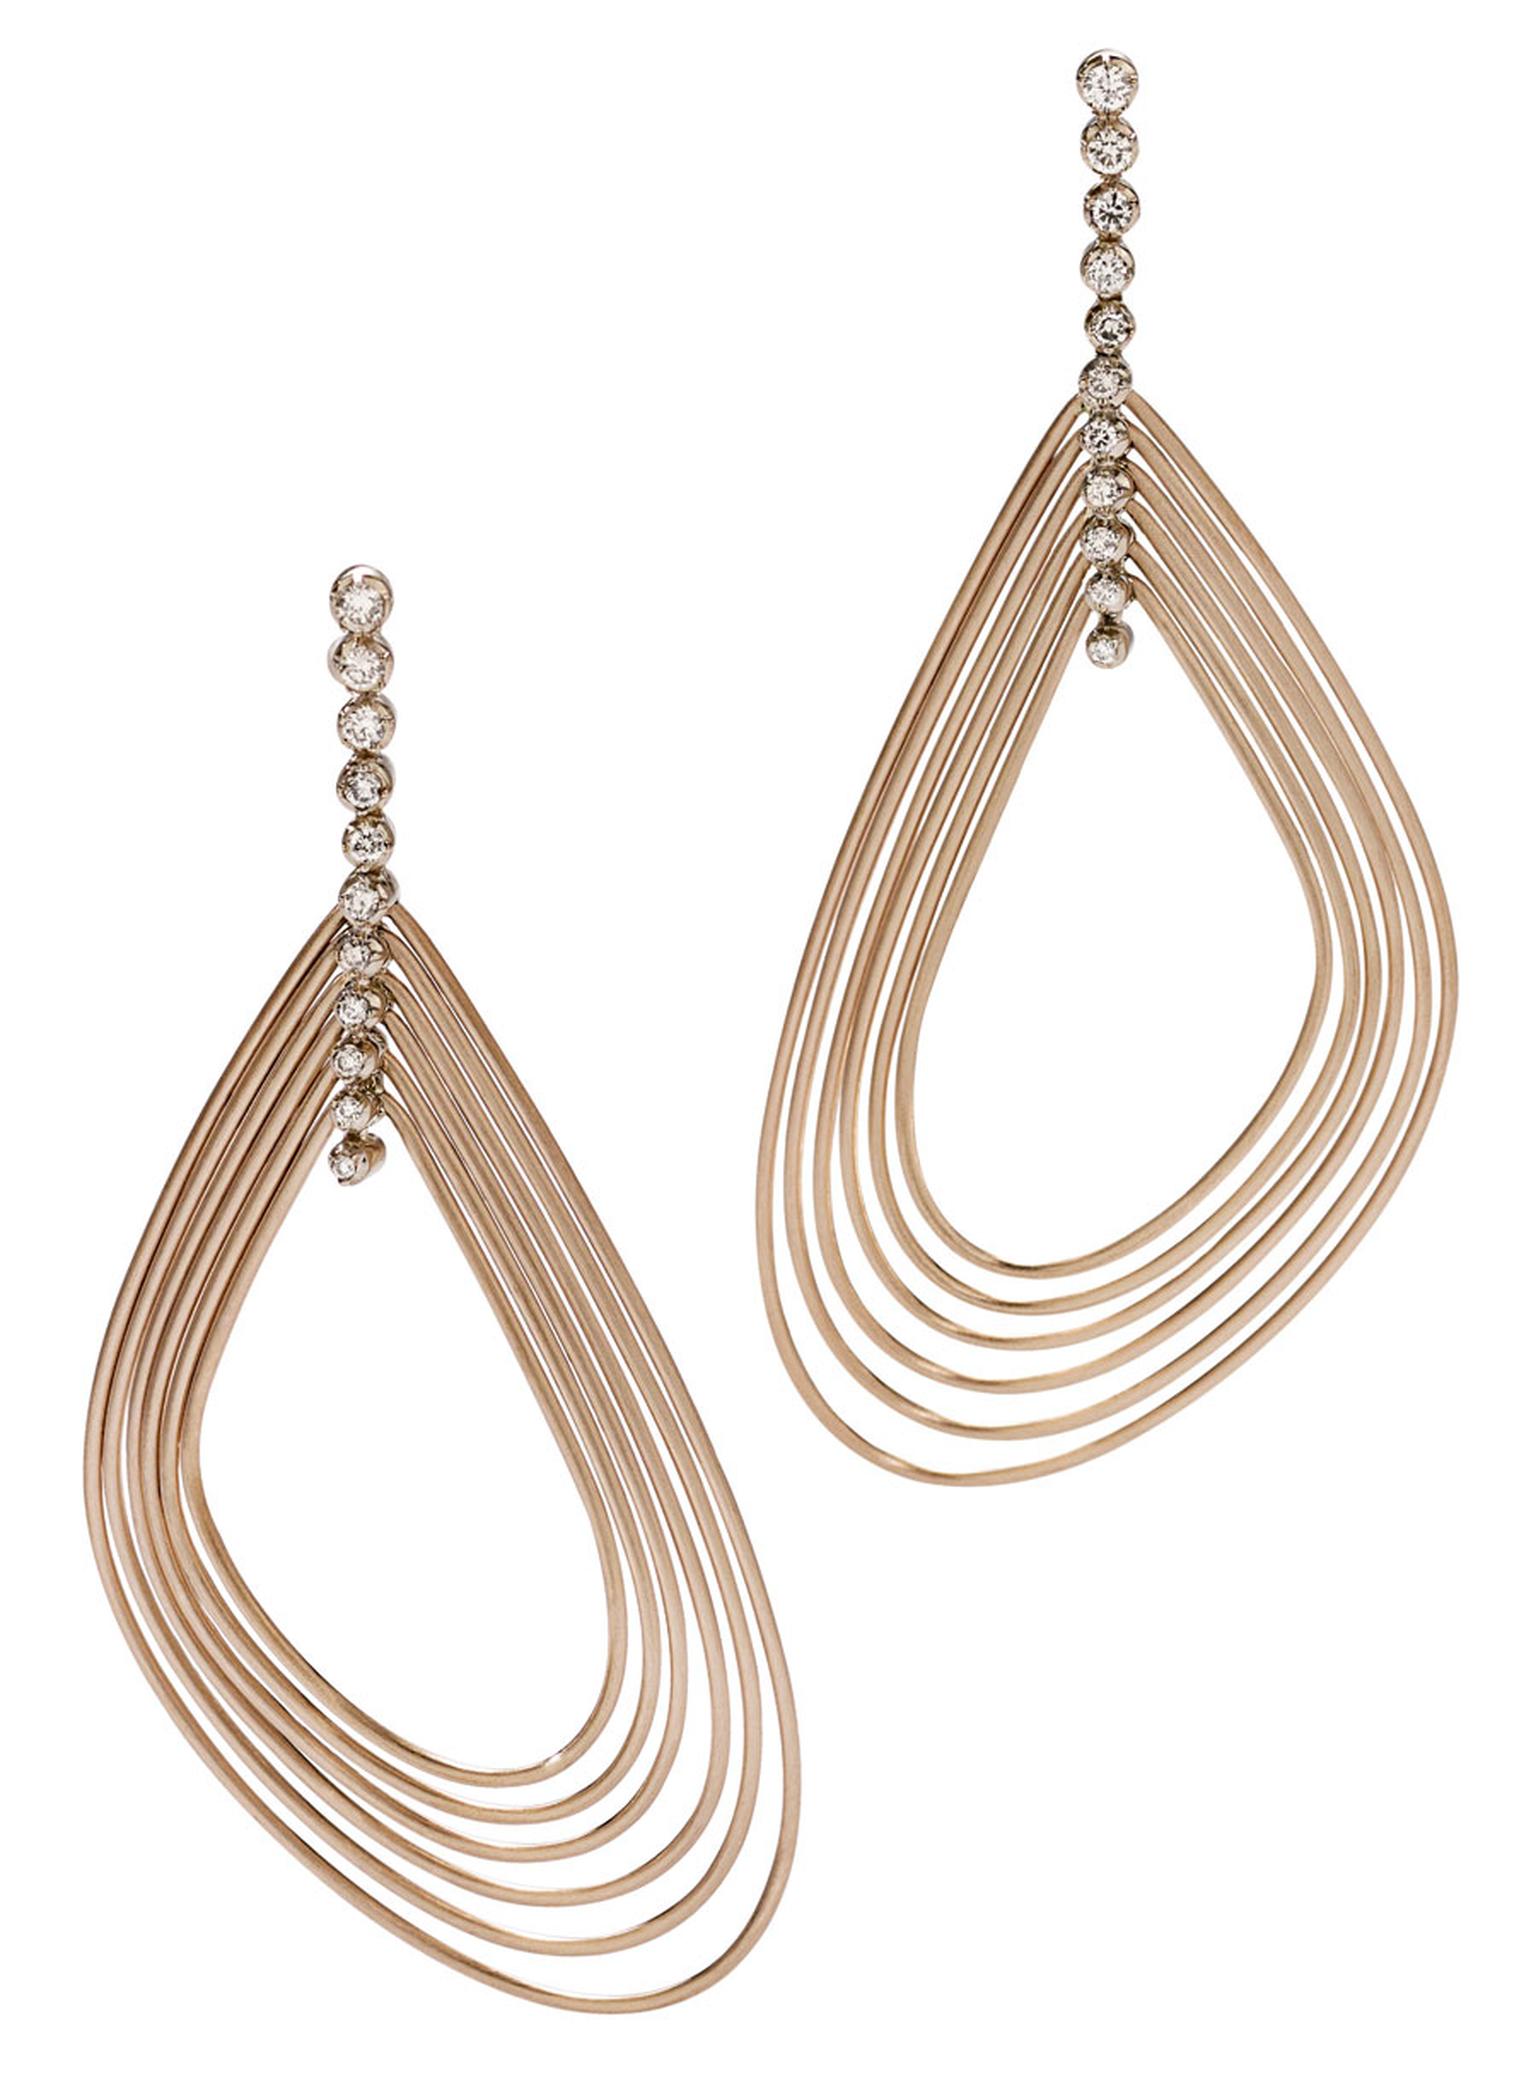 H-Stern-Earrings-in-rose-and-Noble-Gold-wirh-diamonds.jpg